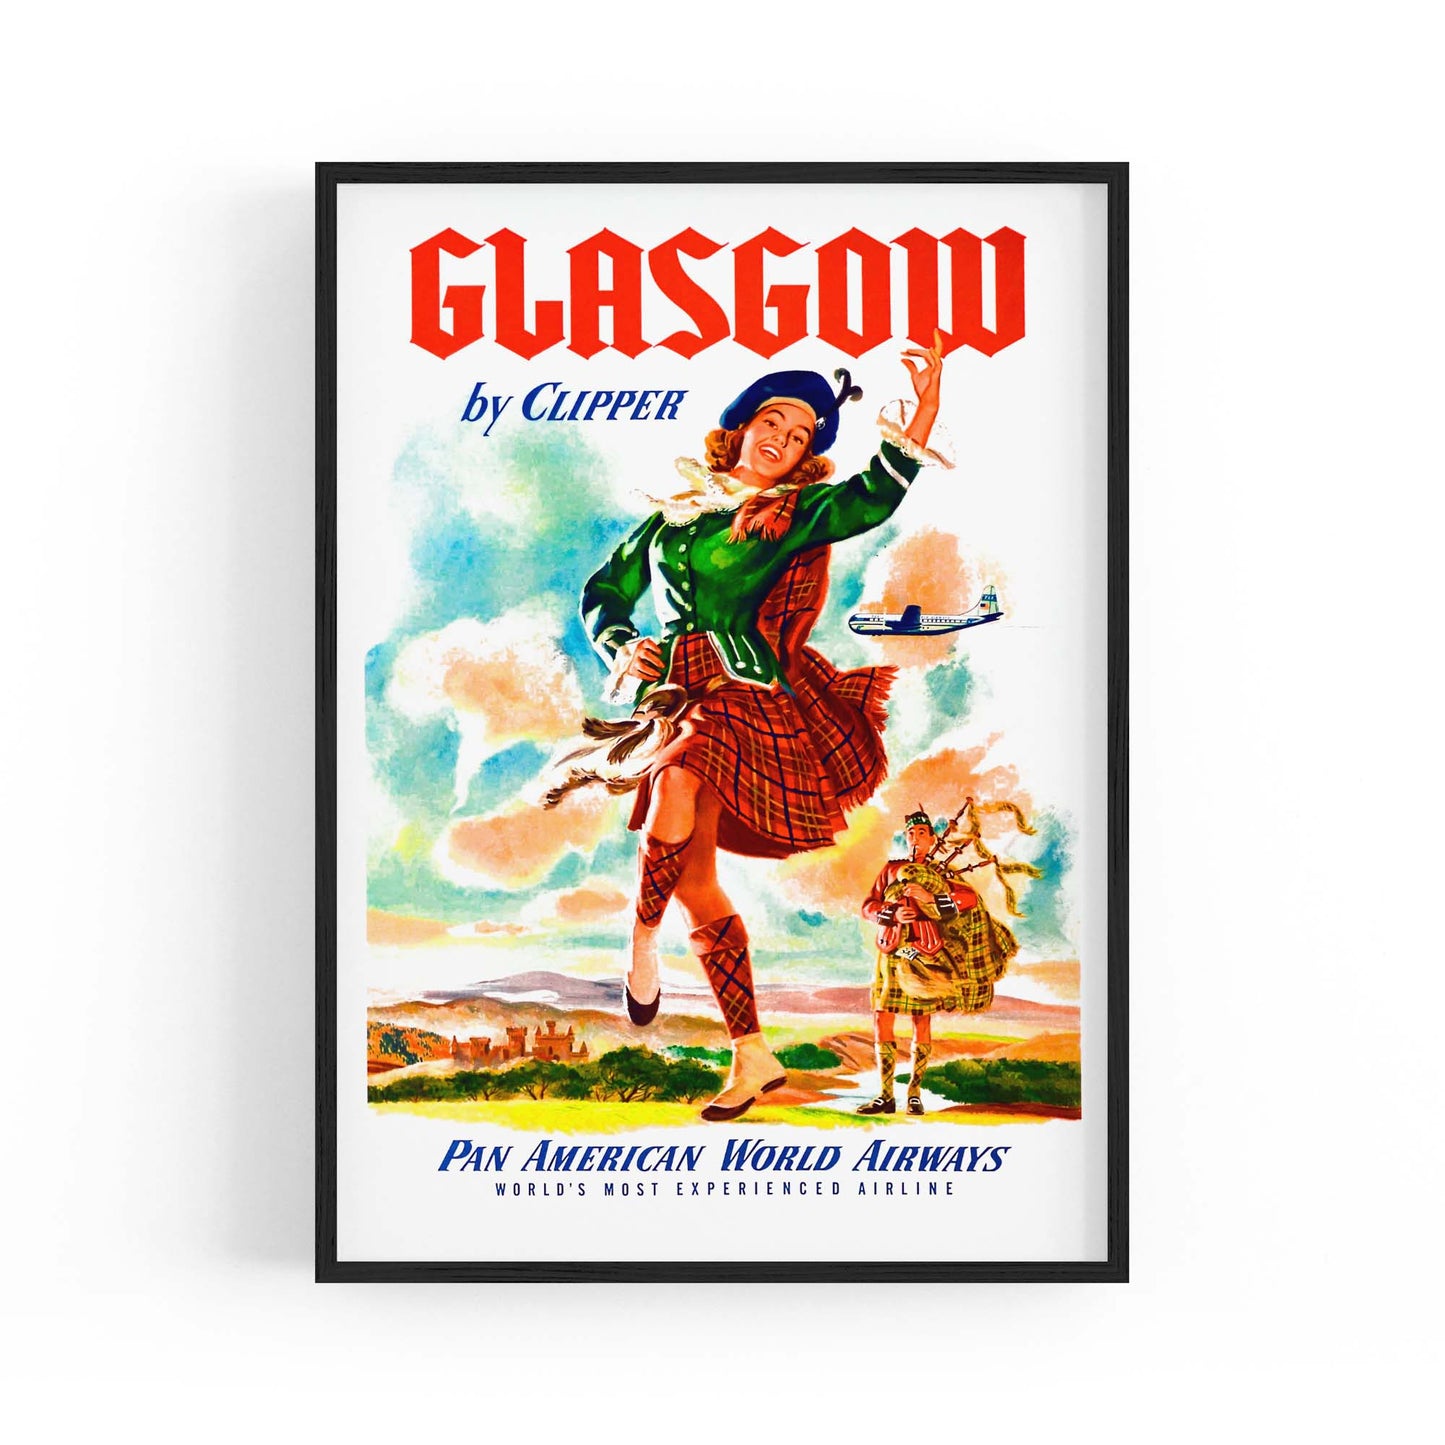 Glasgow, Scotland Vintage Travel Advert Wall Art - The Affordable Art Company